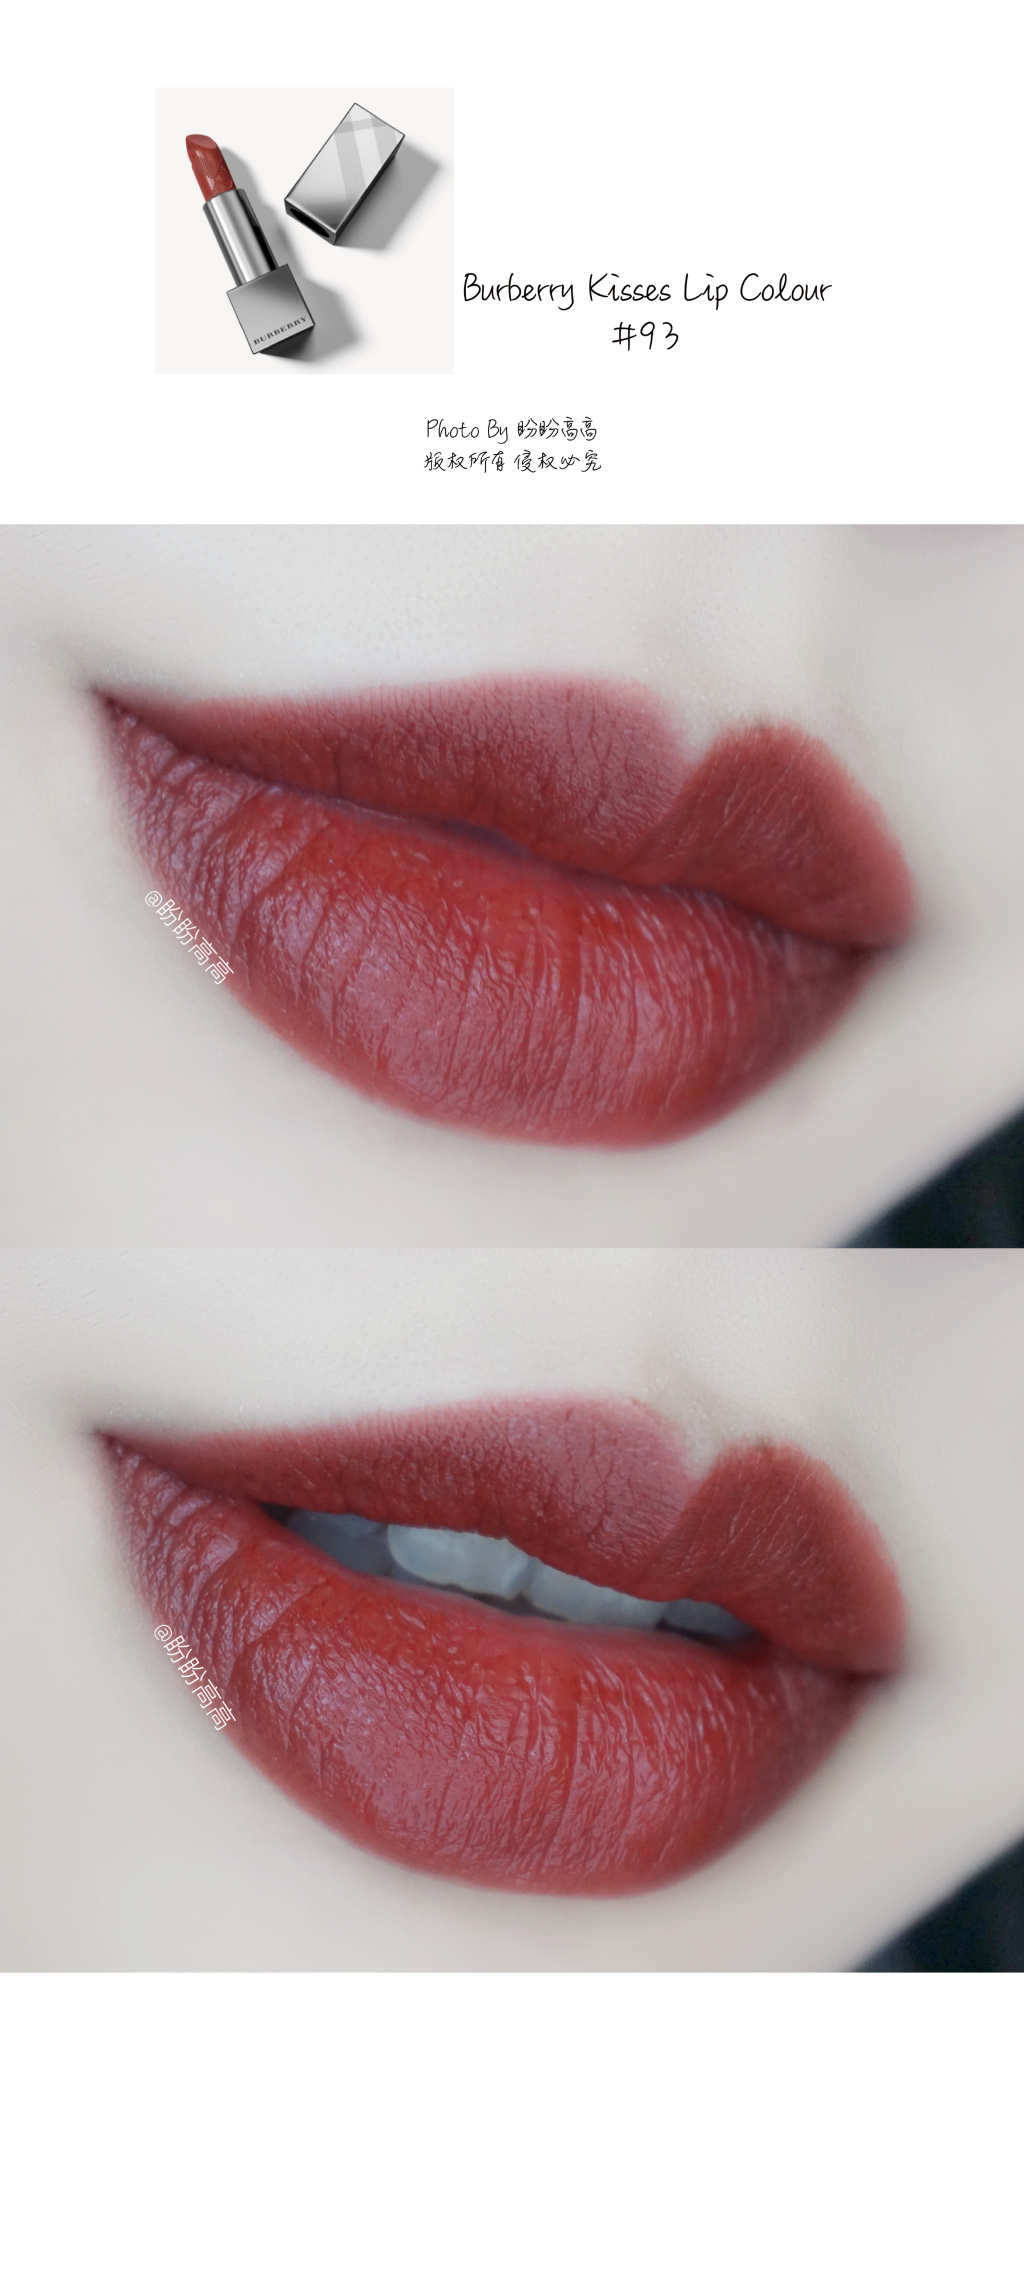 Burberry Kisses Lip Colour - 93、Nars Audacious Lipstick - Leslie试色